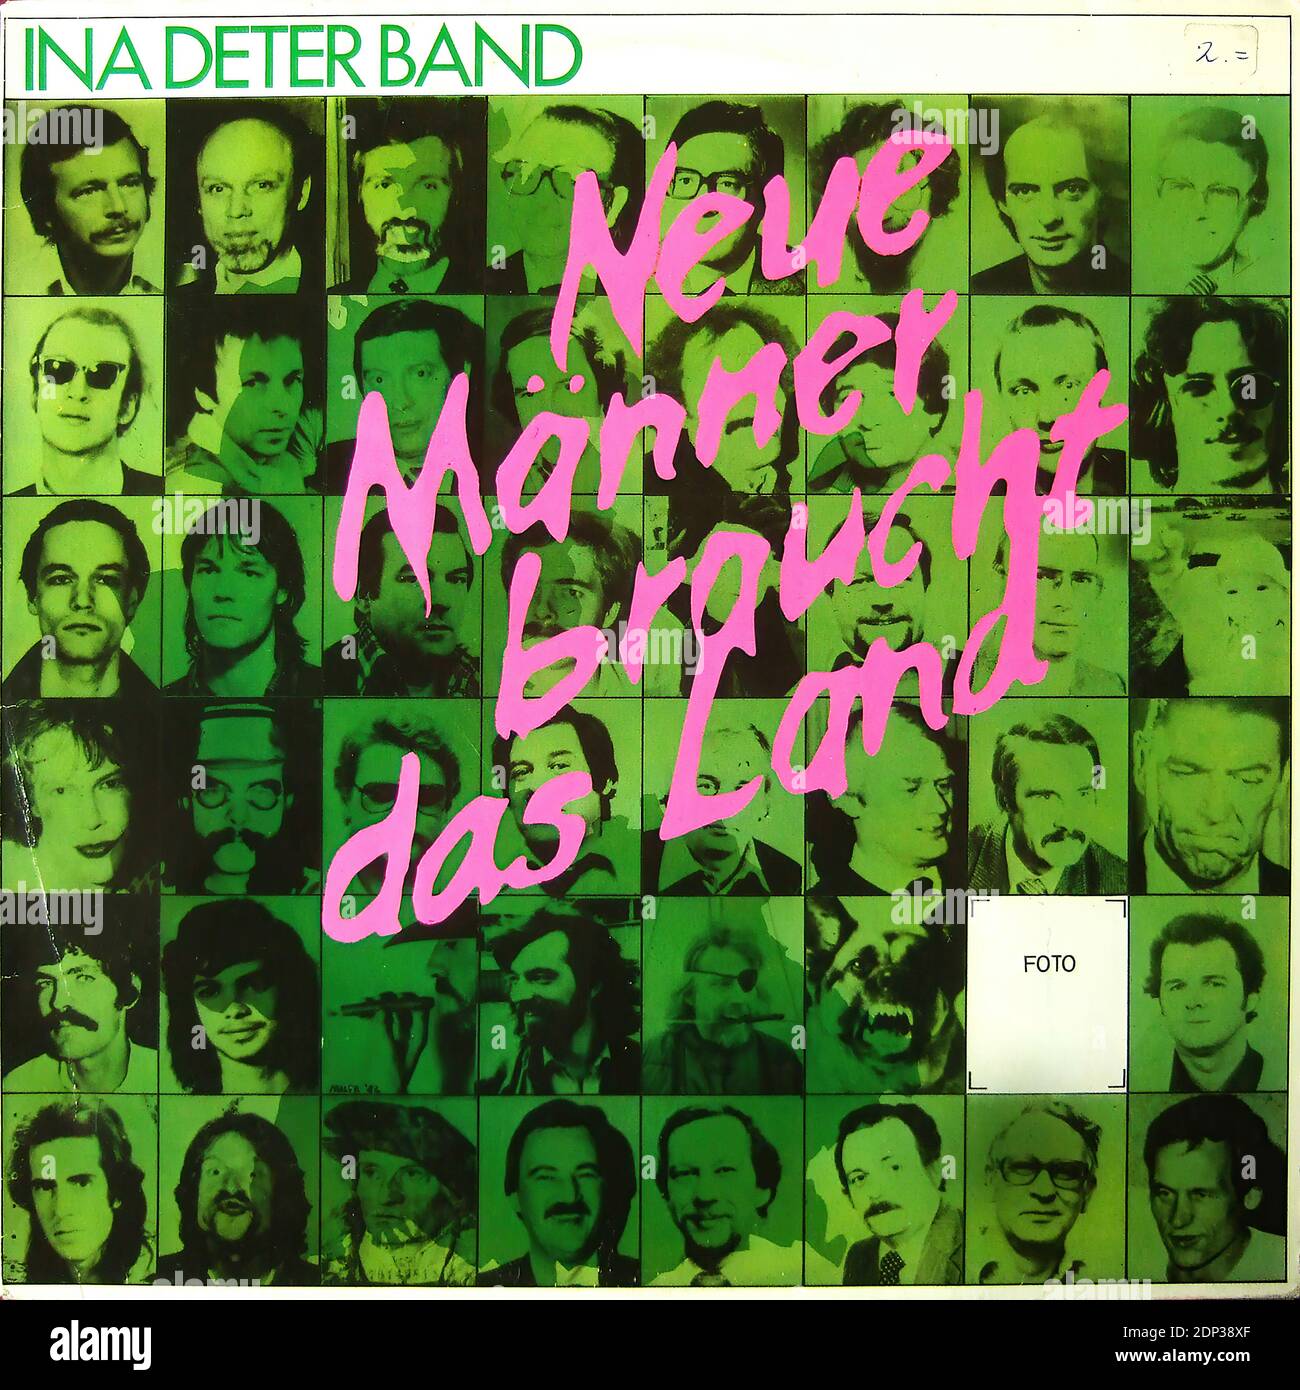 Ina deter Band - Neue Maenner braucht das Land - Copertina di album in vinile d'epoca Foto Stock